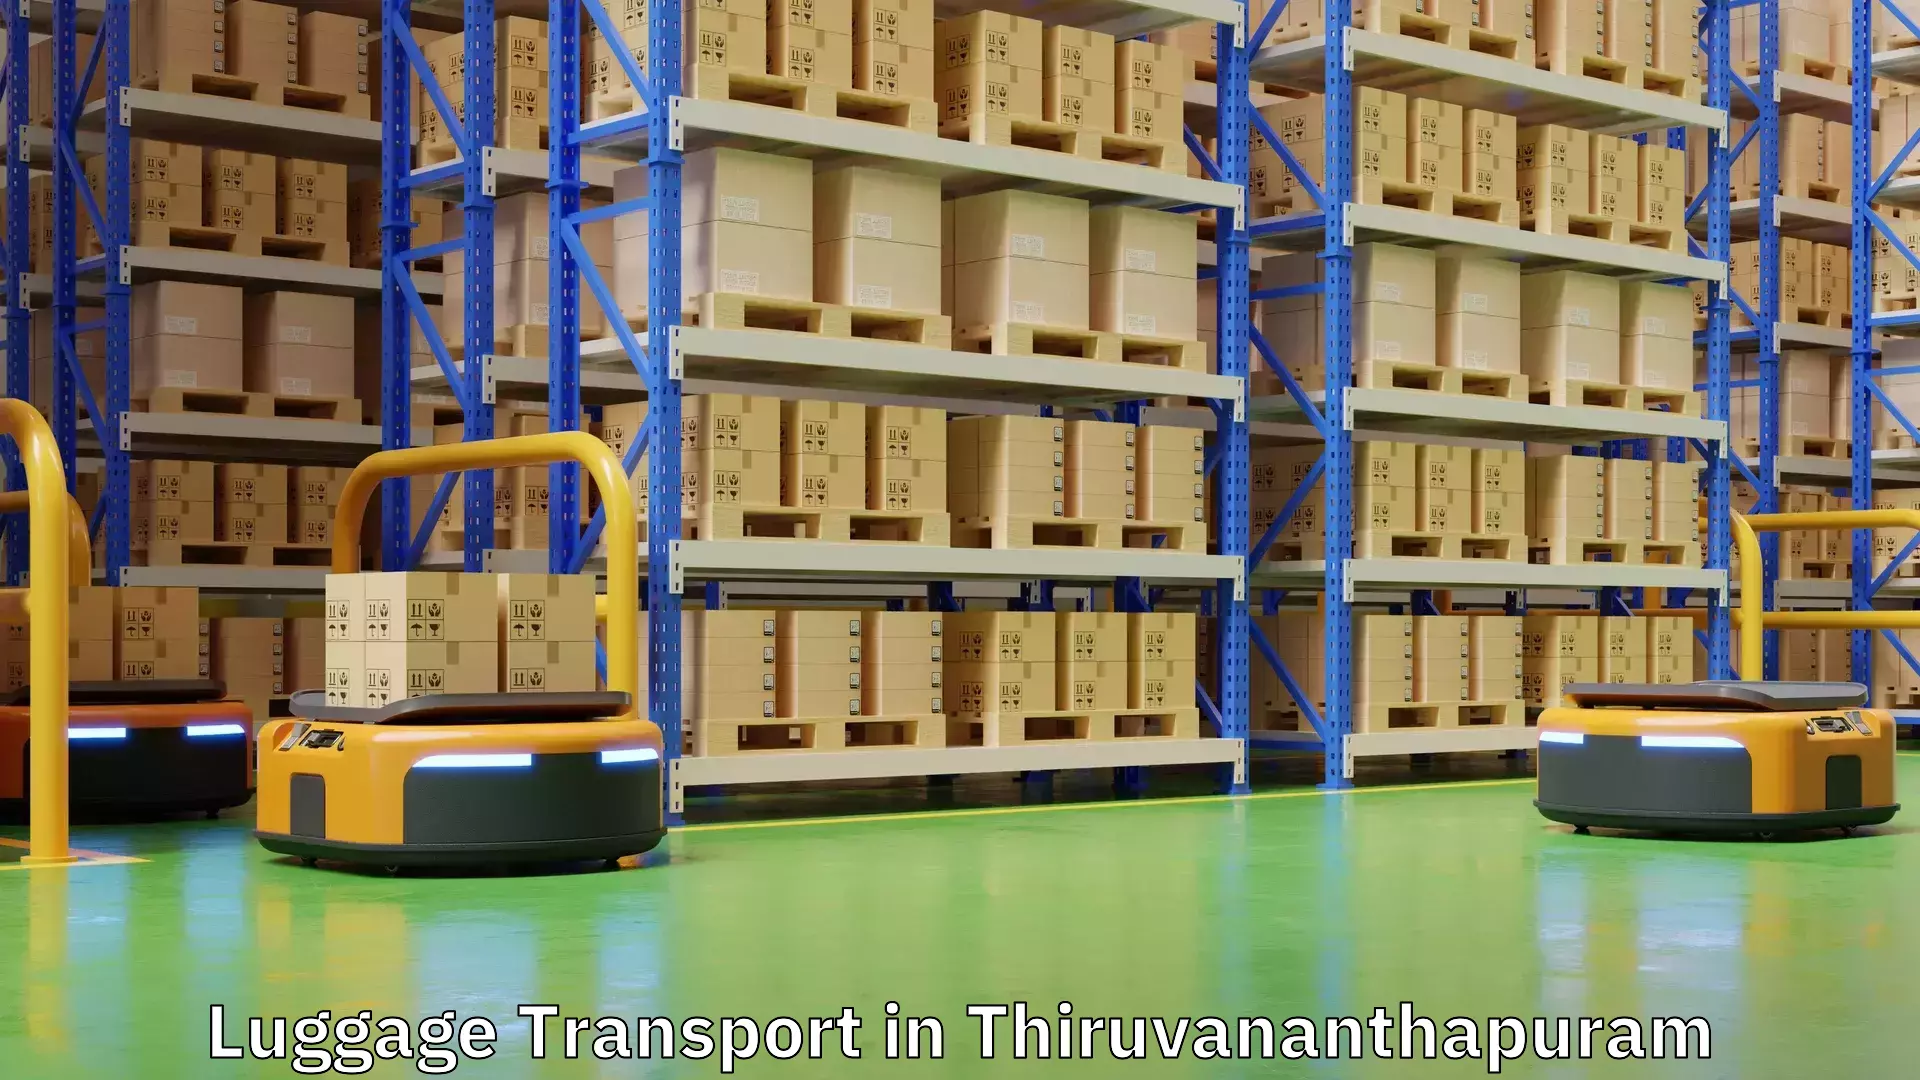 Baggage transport coordination in Thiruvananthapuram